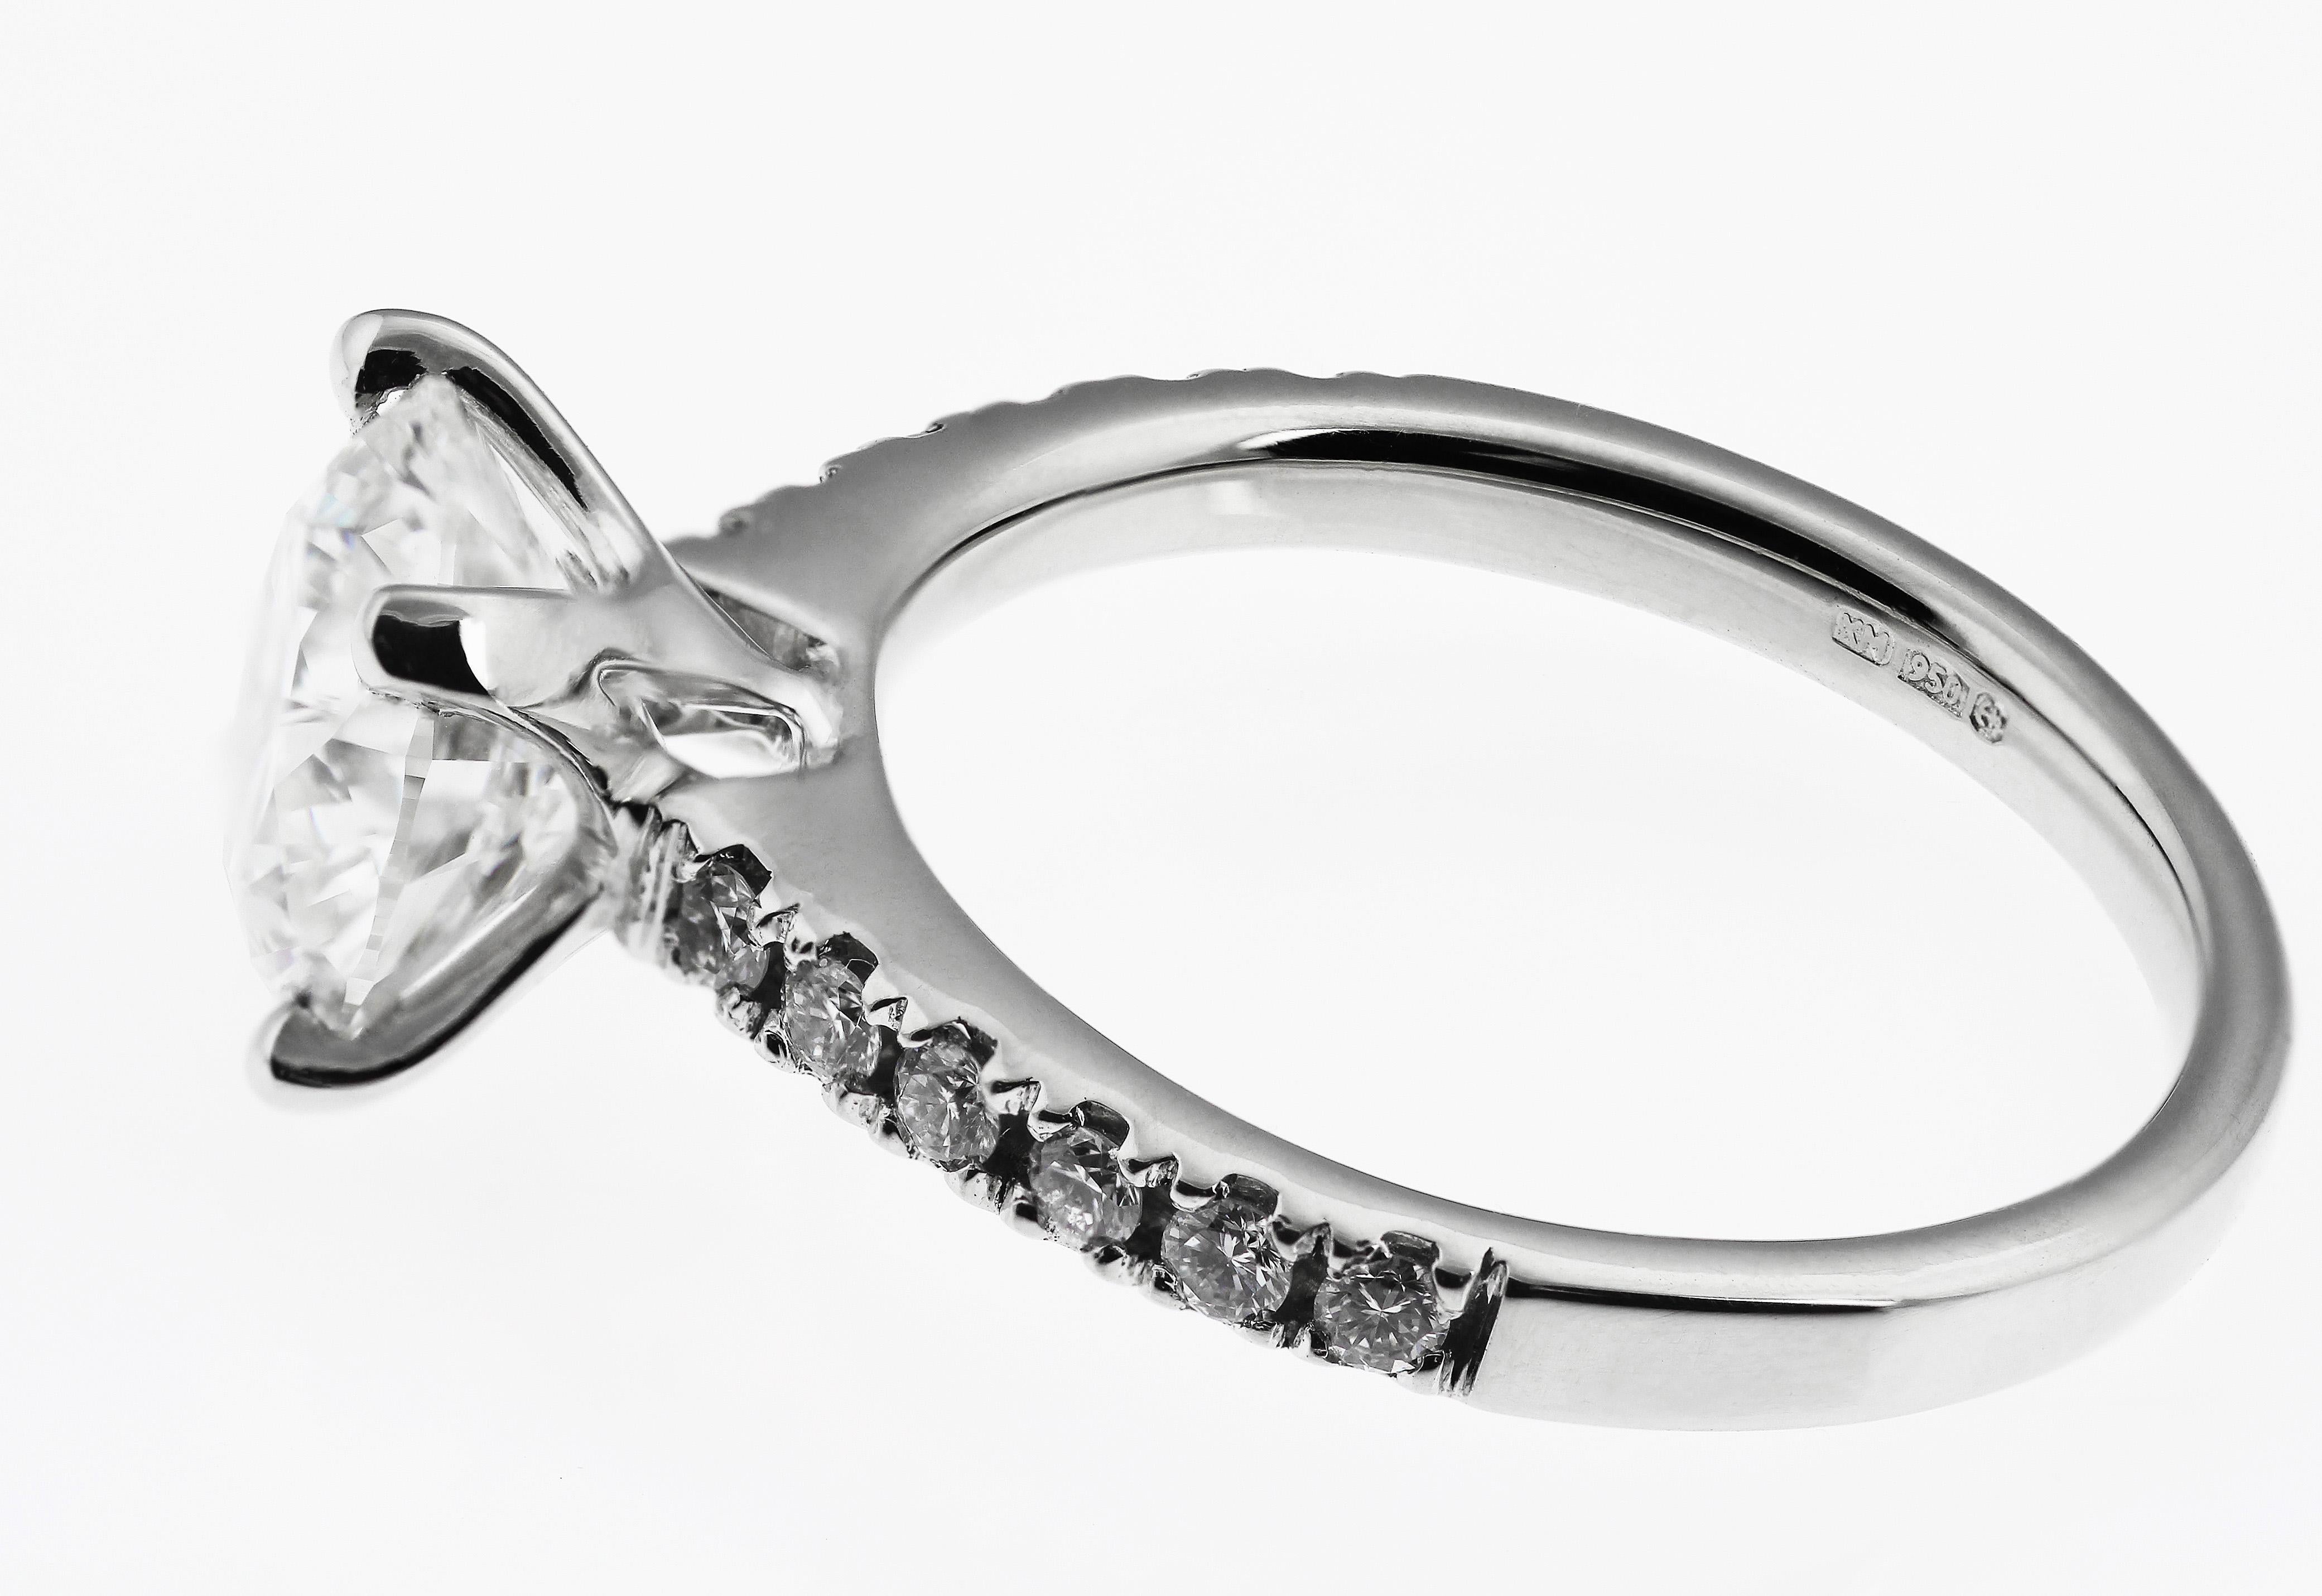 2.21 carat diamond ring